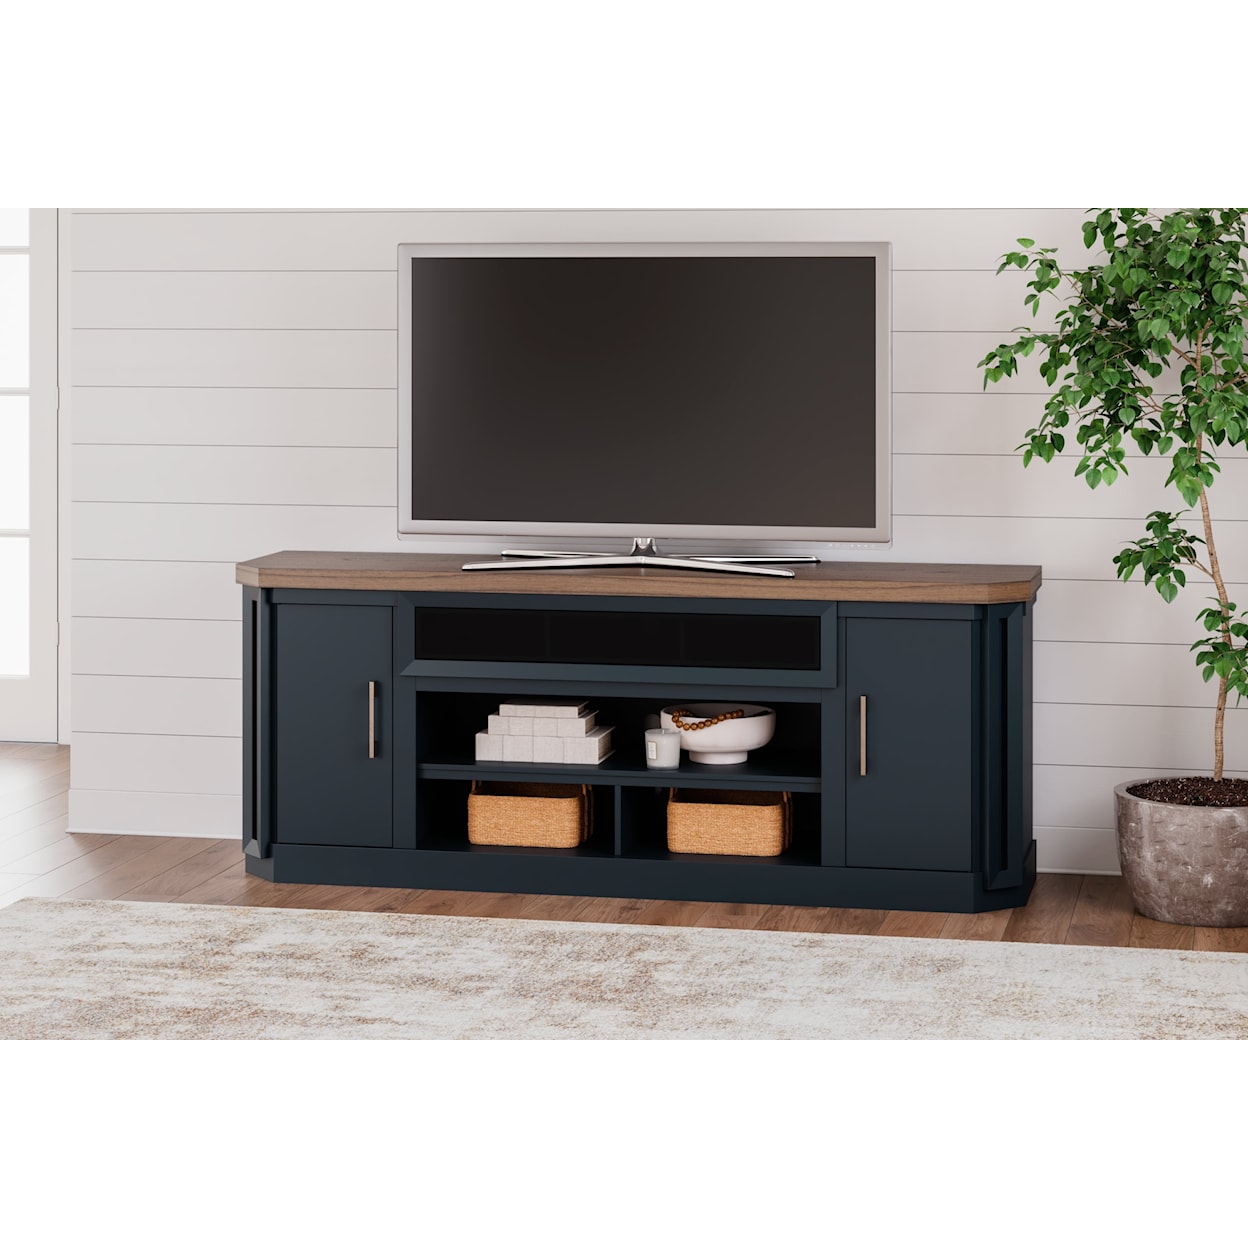 StyleLine NASA XL TV Stand w/Fireplace Option